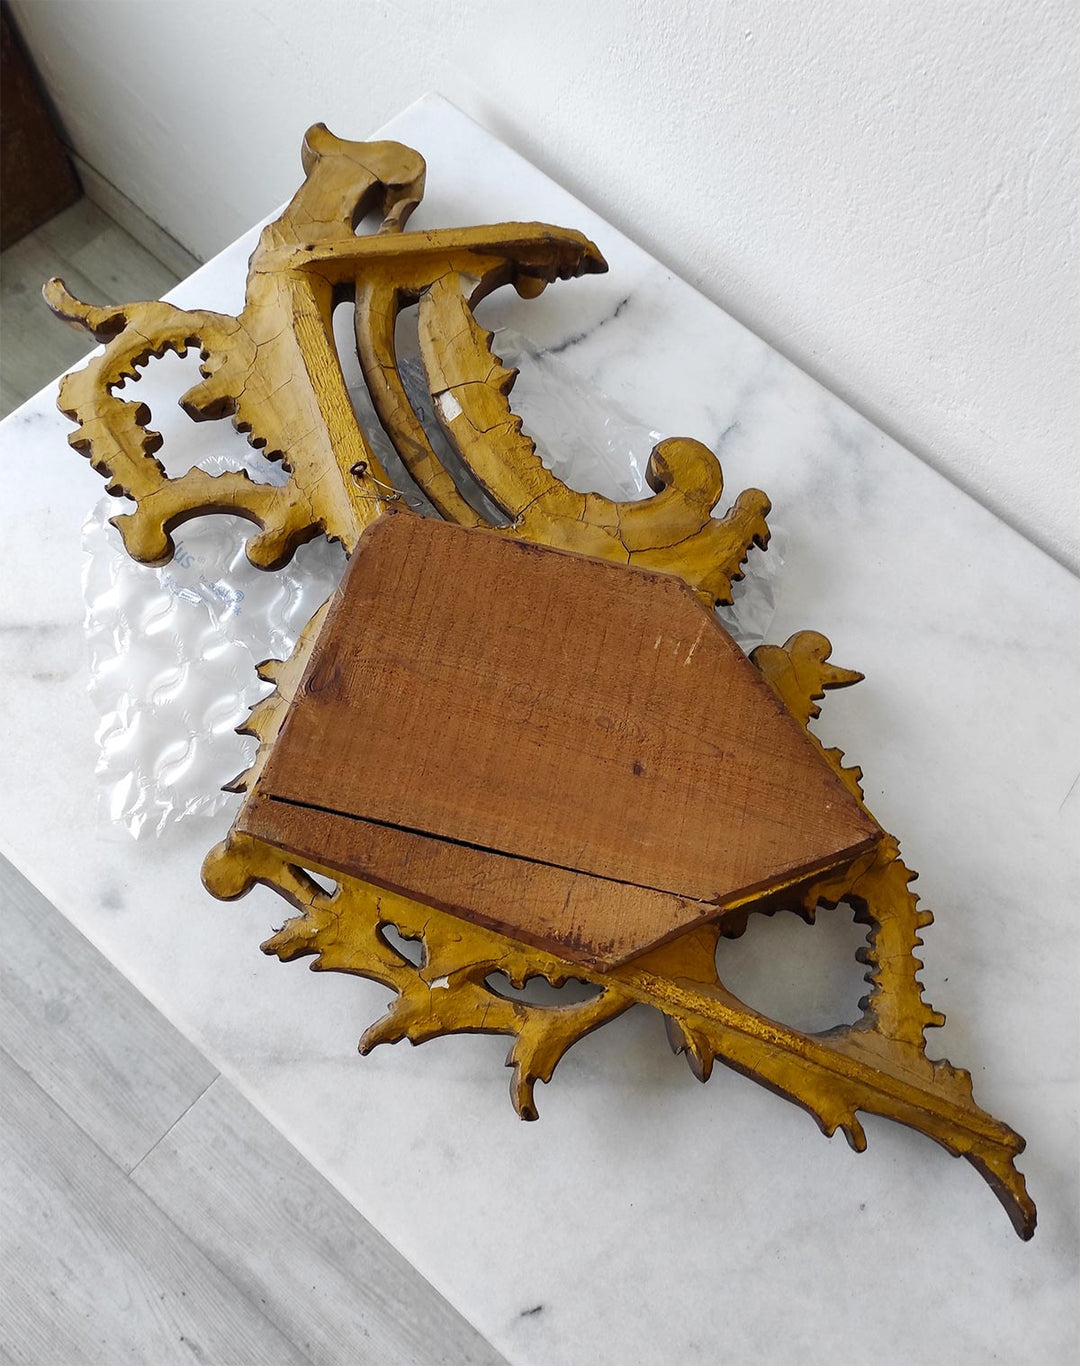 Pareja antiguos espejos dorados cornucopia antique french gilded mirrors